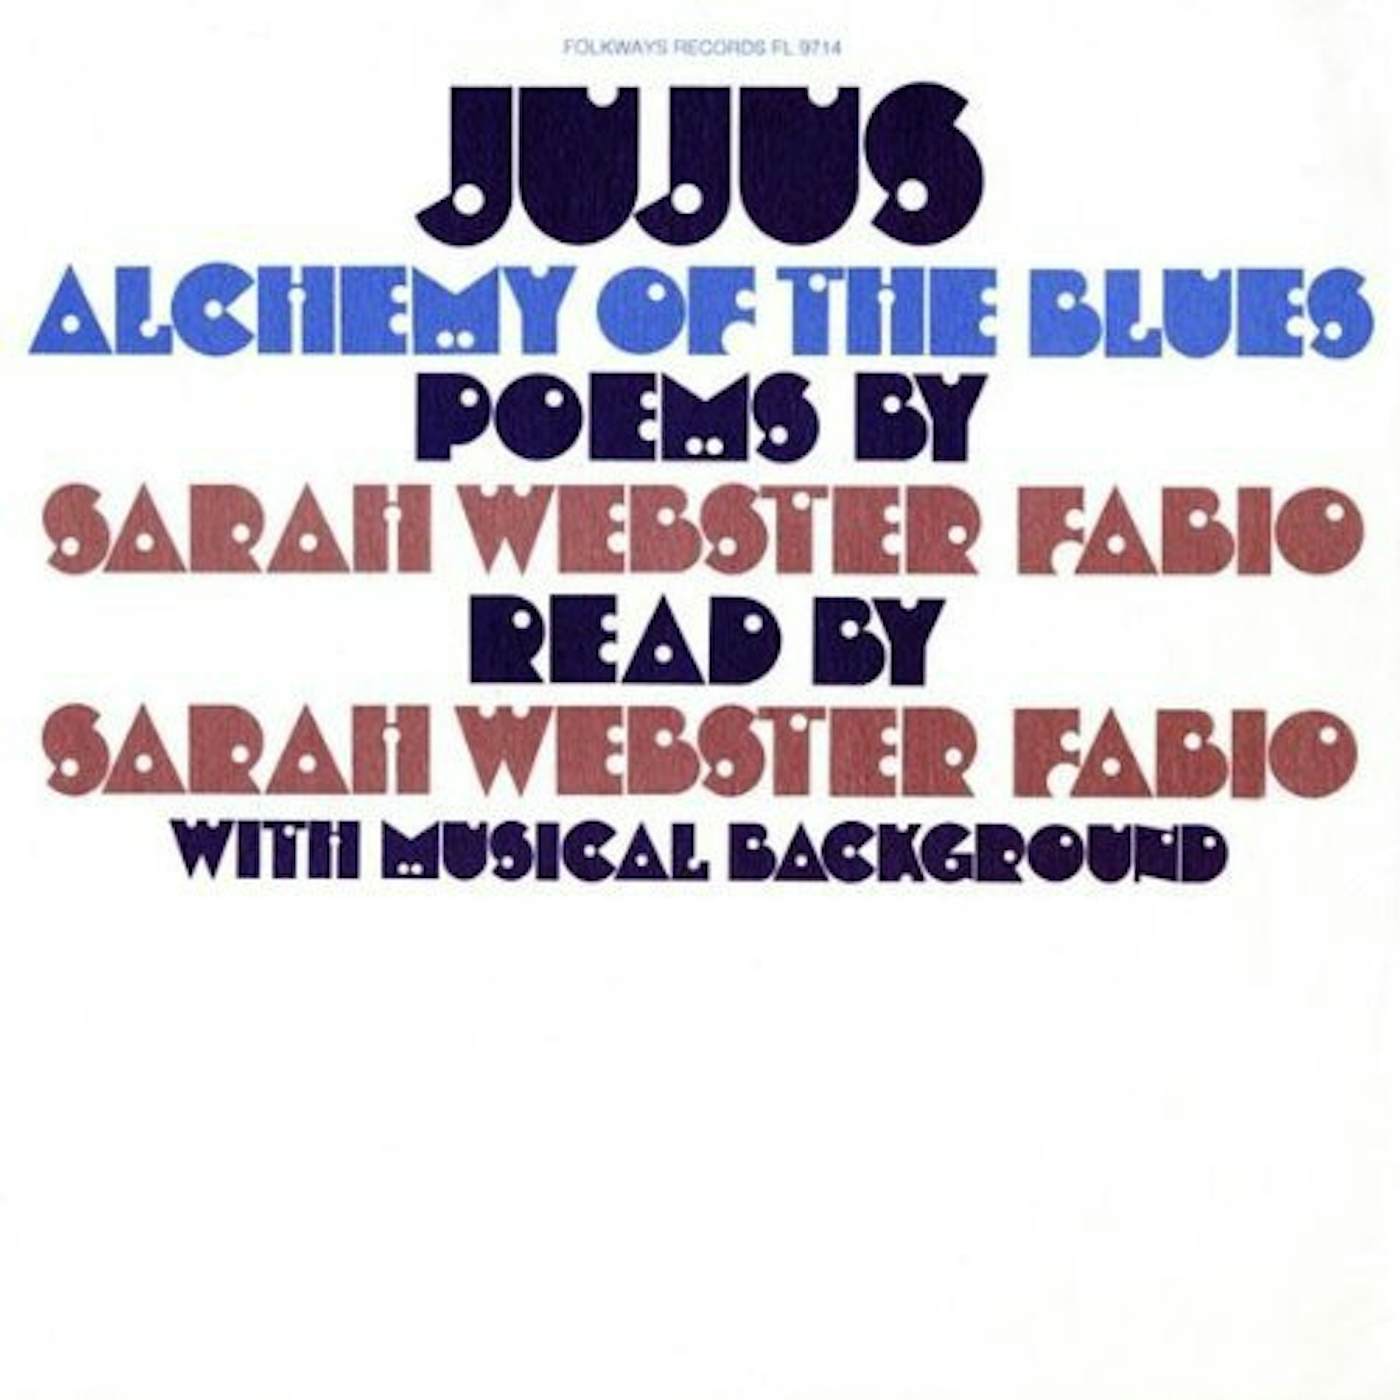 Sarah Webster Fabio JUJUS / ALCHEMY OF THE BLUES Vinyl Record